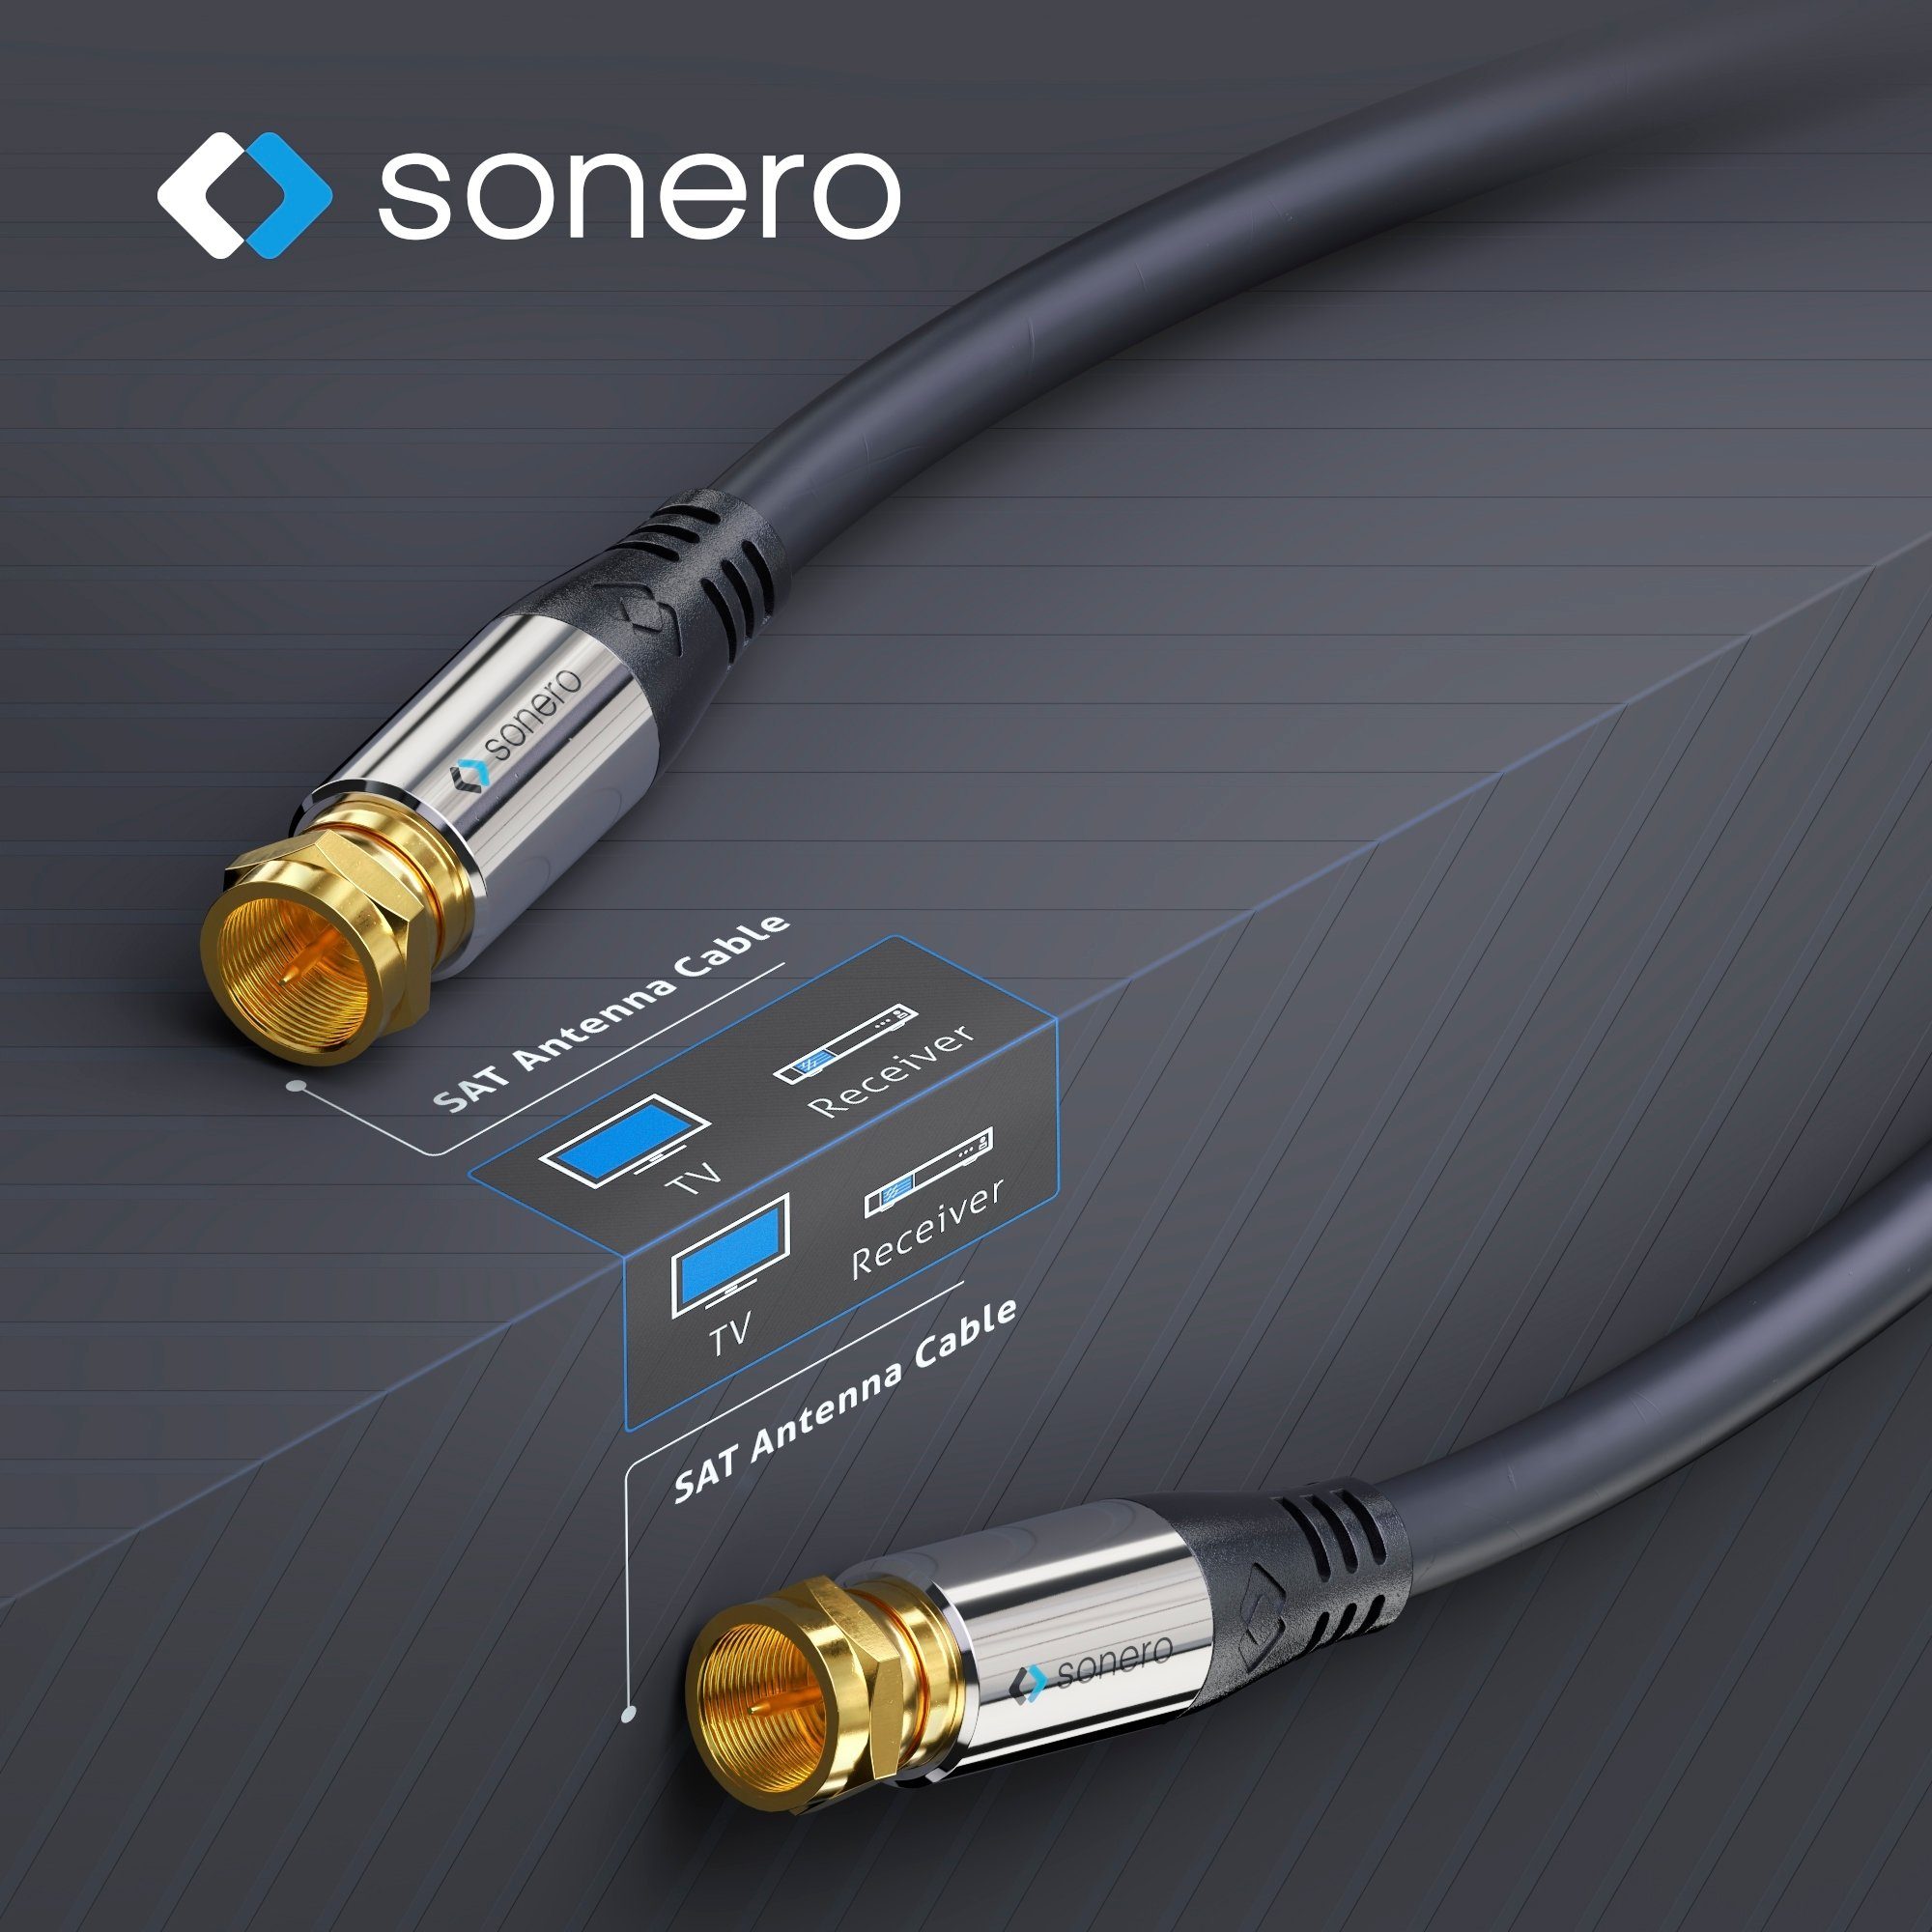 Premium SAT-Kabel 7,50m, sonero sonero® Antennenkabel / Sat schwarz Koaxialkabel,